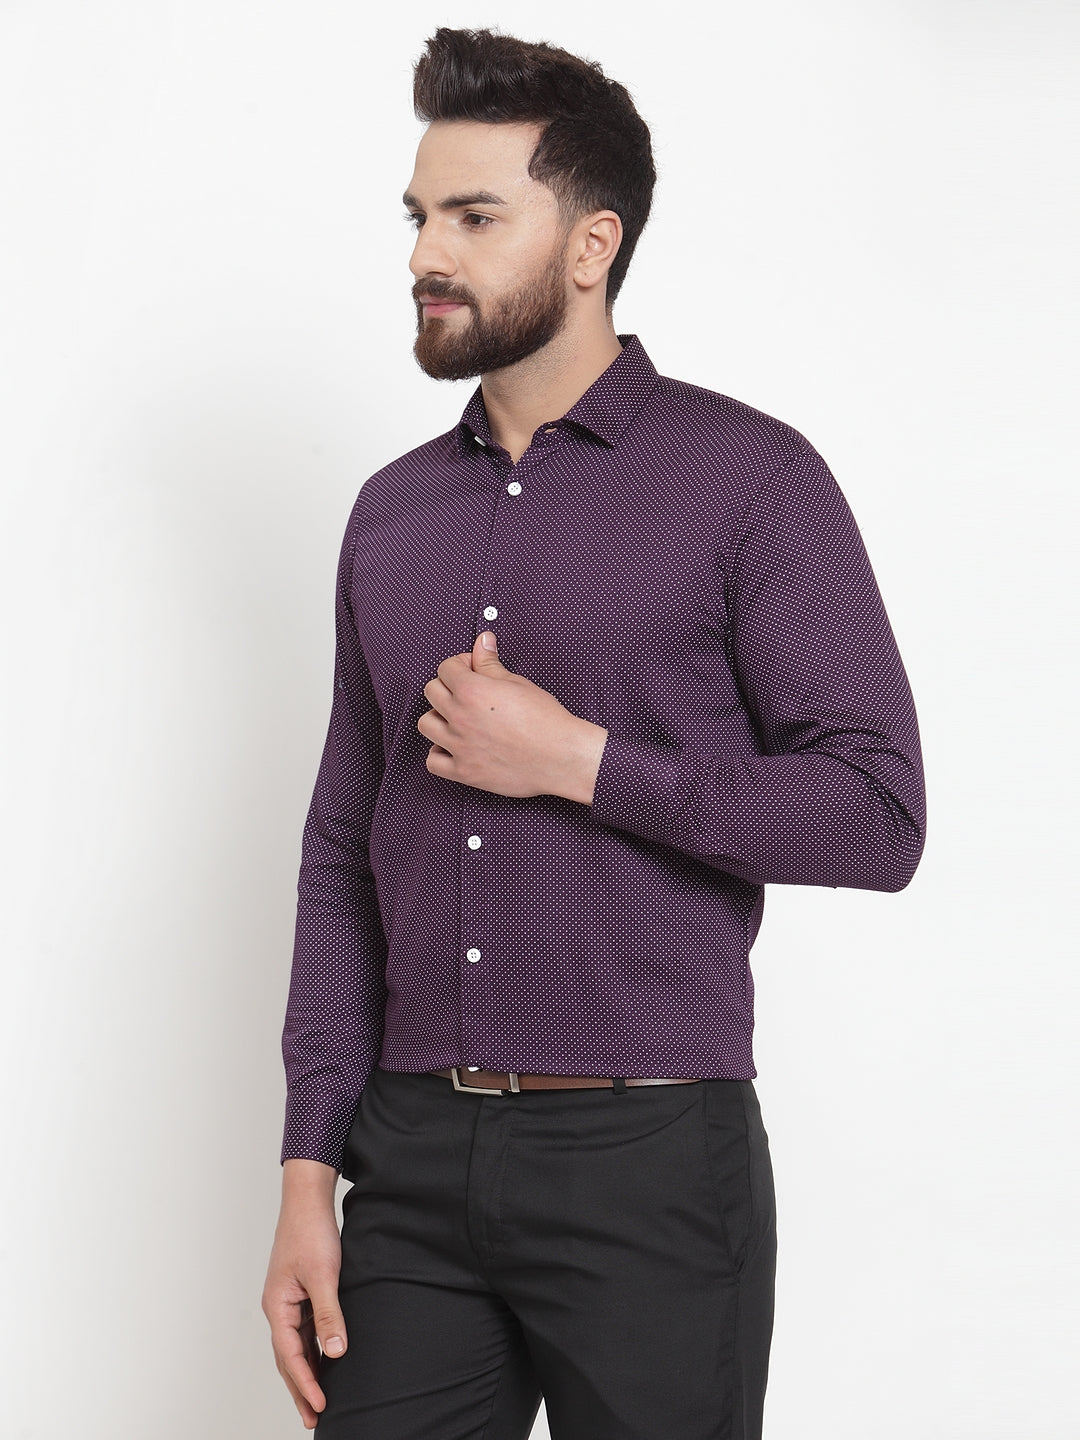 Jainish Purple Men's Cotton Polka Dots Formal Shirts